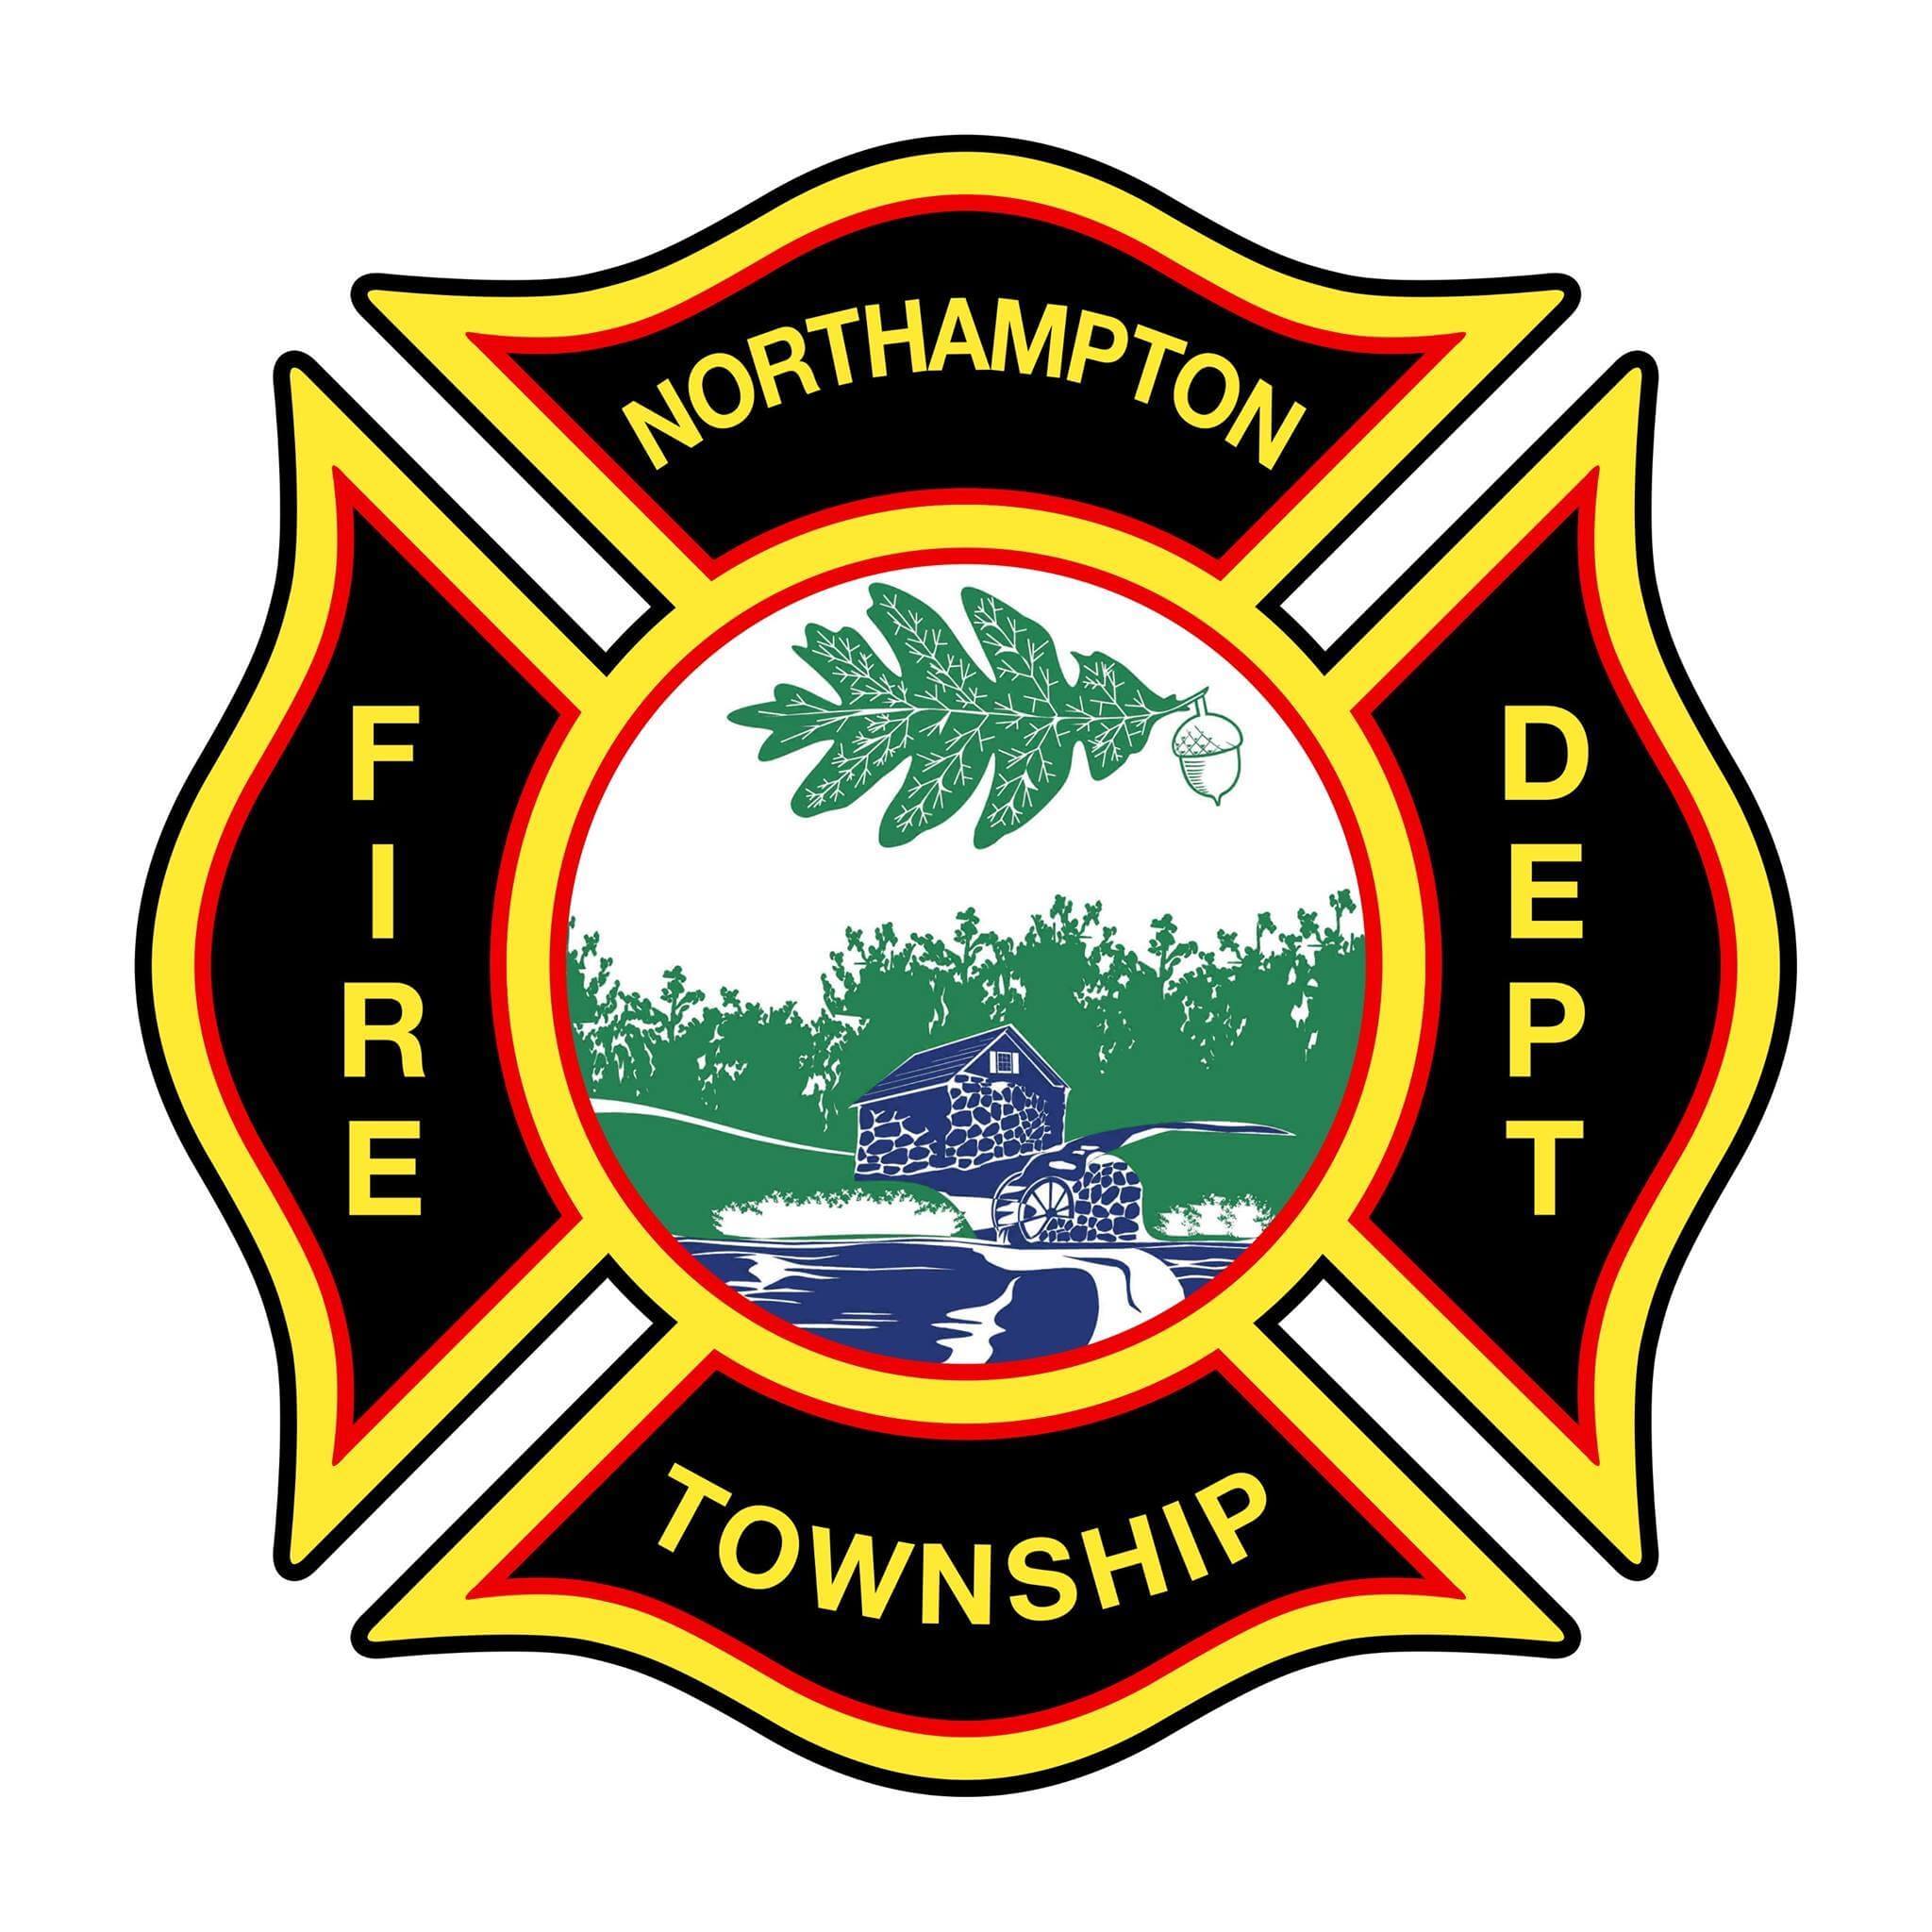 Northampton Township Vol Fire Department